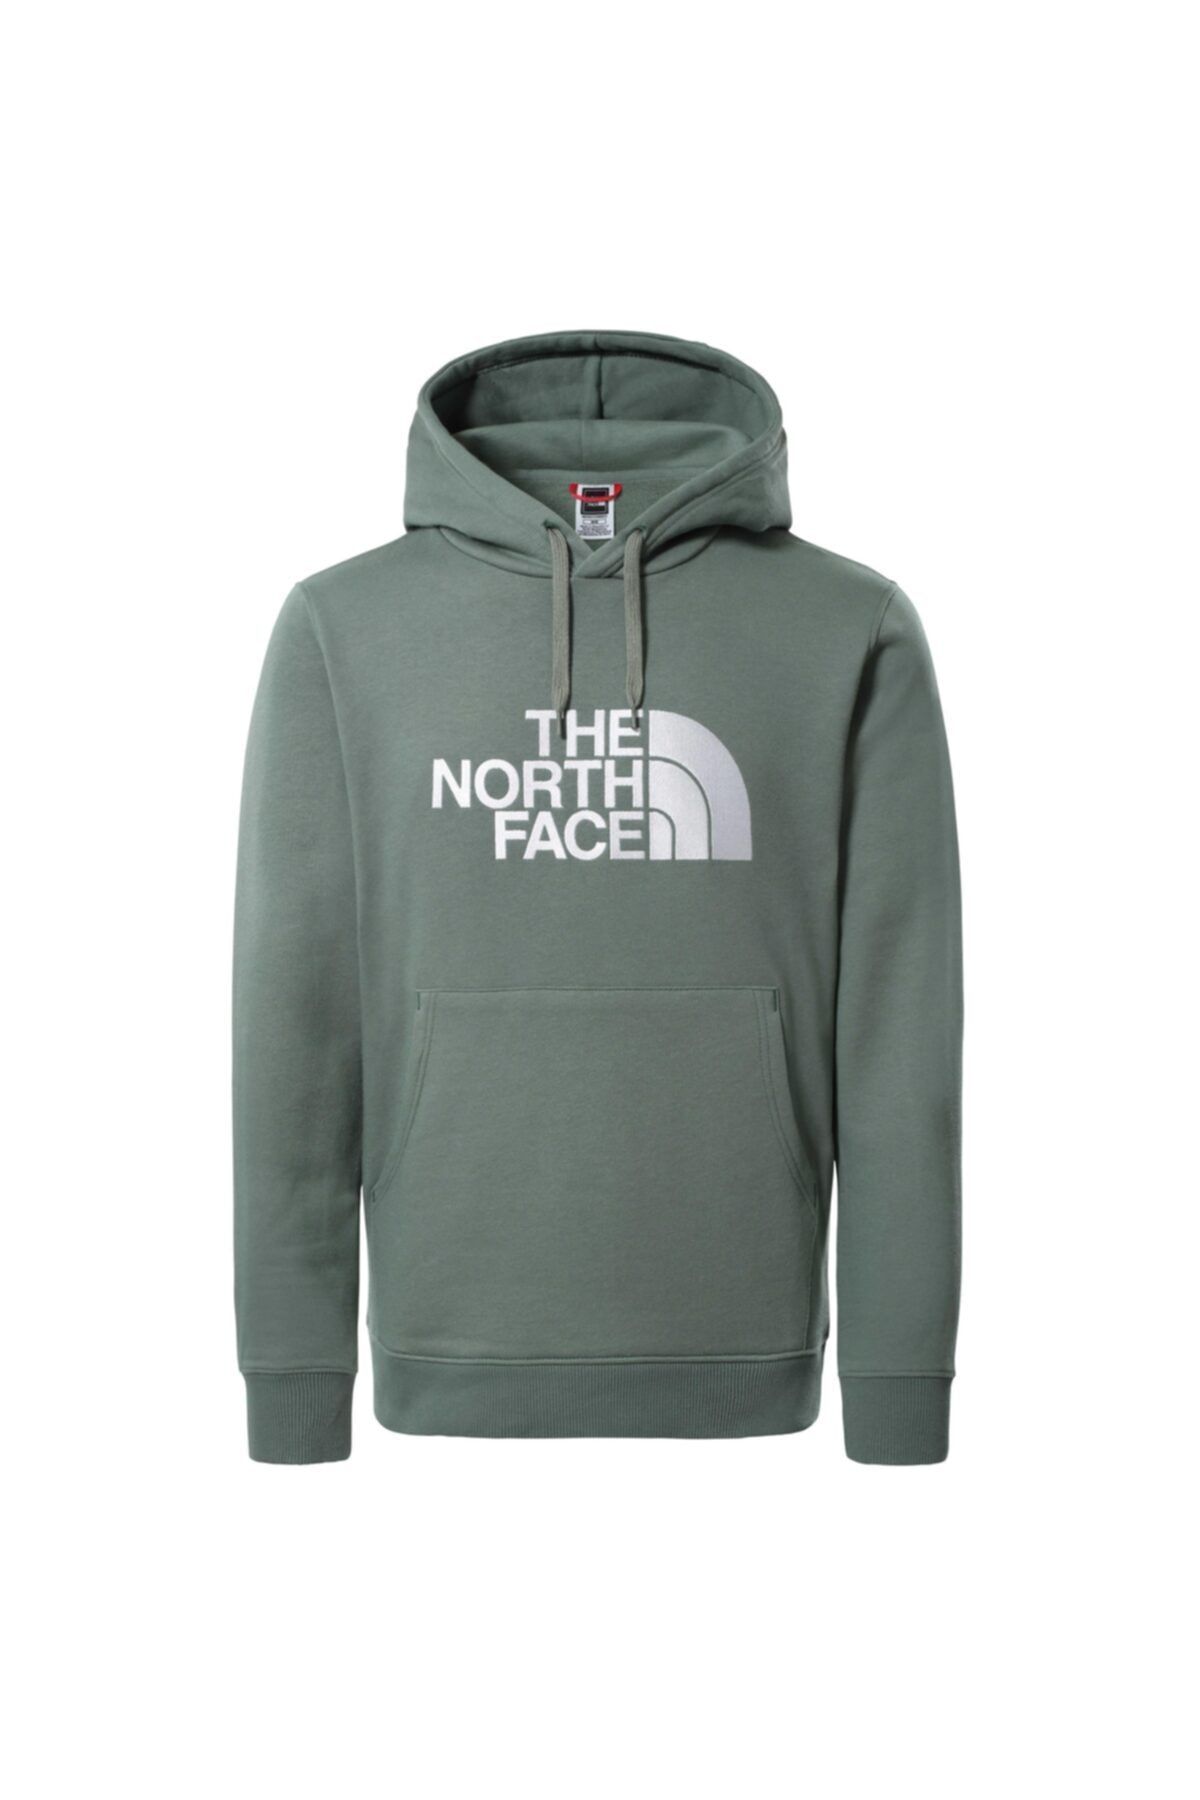 The North Face Drew Peak Pullover Erkek Sweatshirt T0ahjyv1t